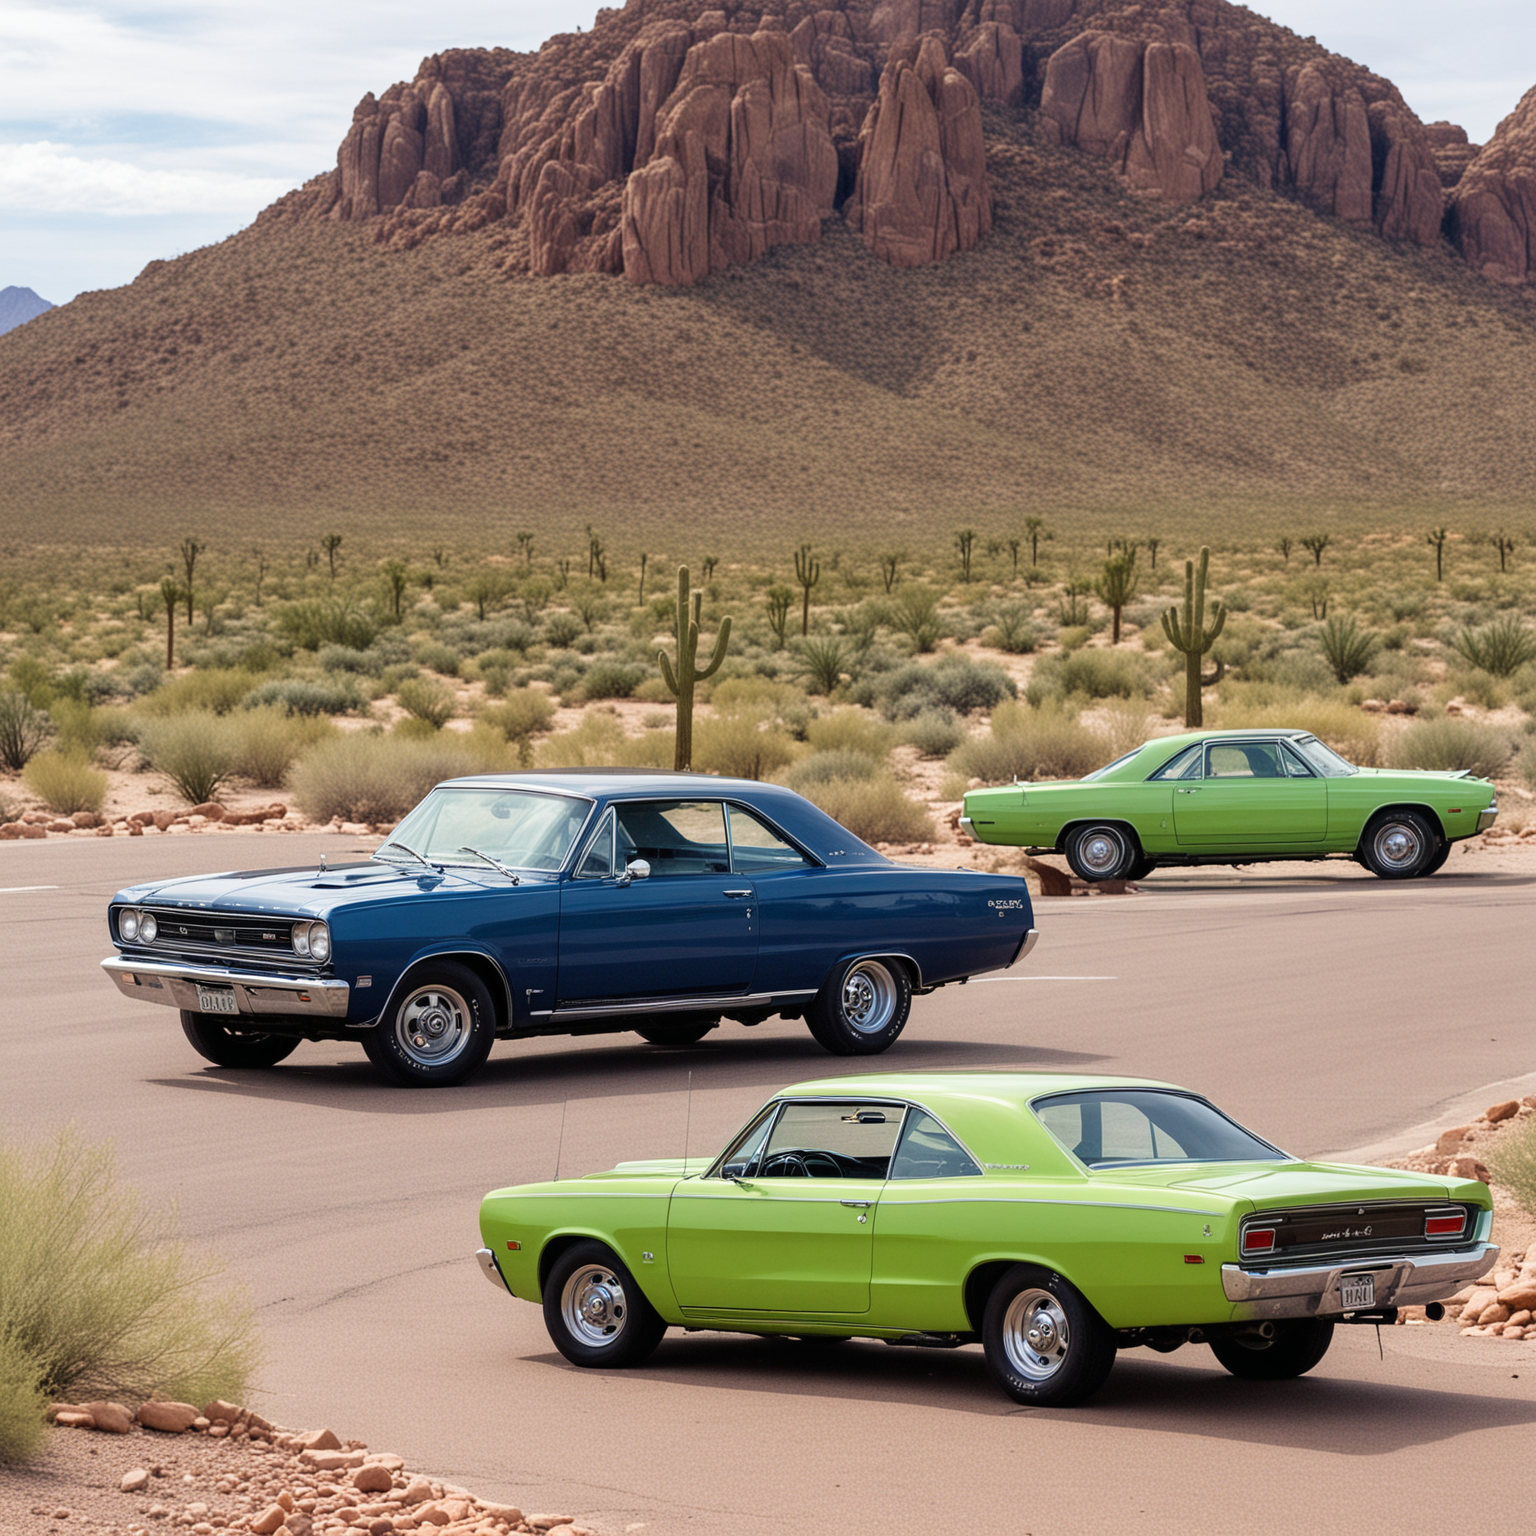 Classic Cars in Arizona Desert Landscape